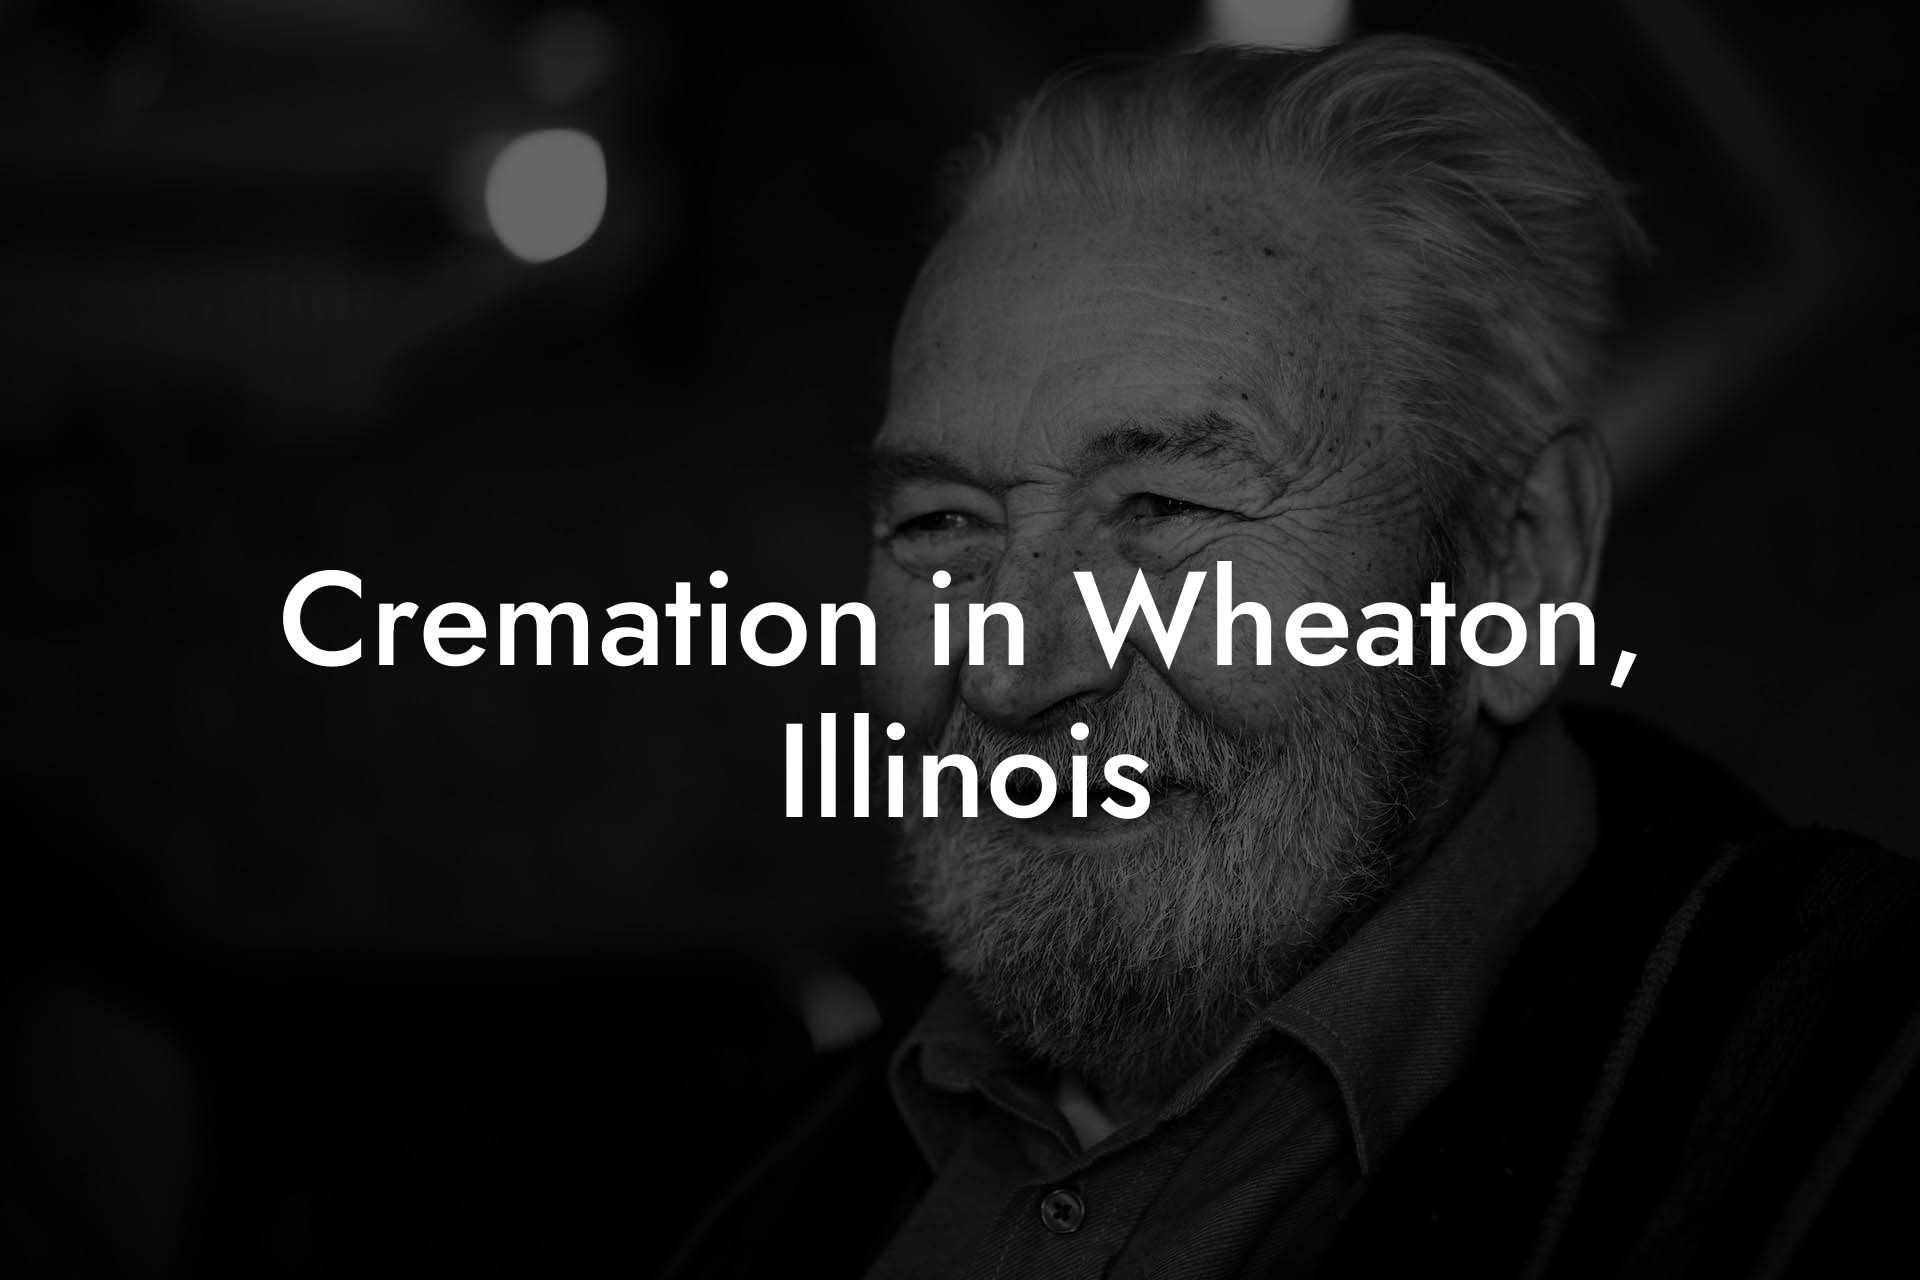 Cremation in Wheaton, Illinois